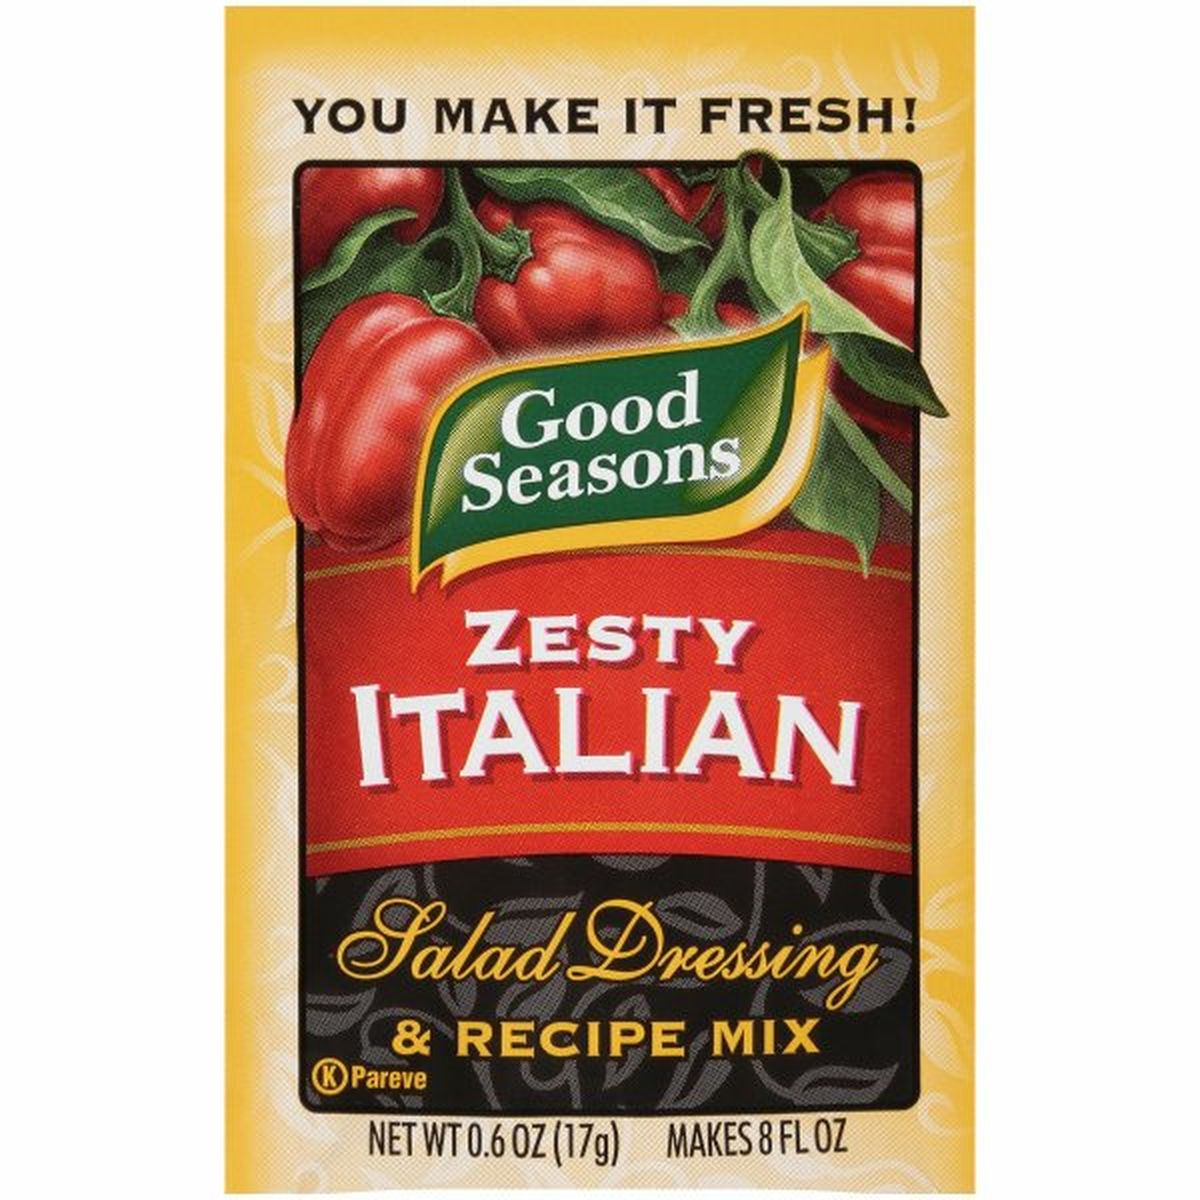 Calories in Good Seasons Zesty Italian Salad Dressing & Recipe Mix